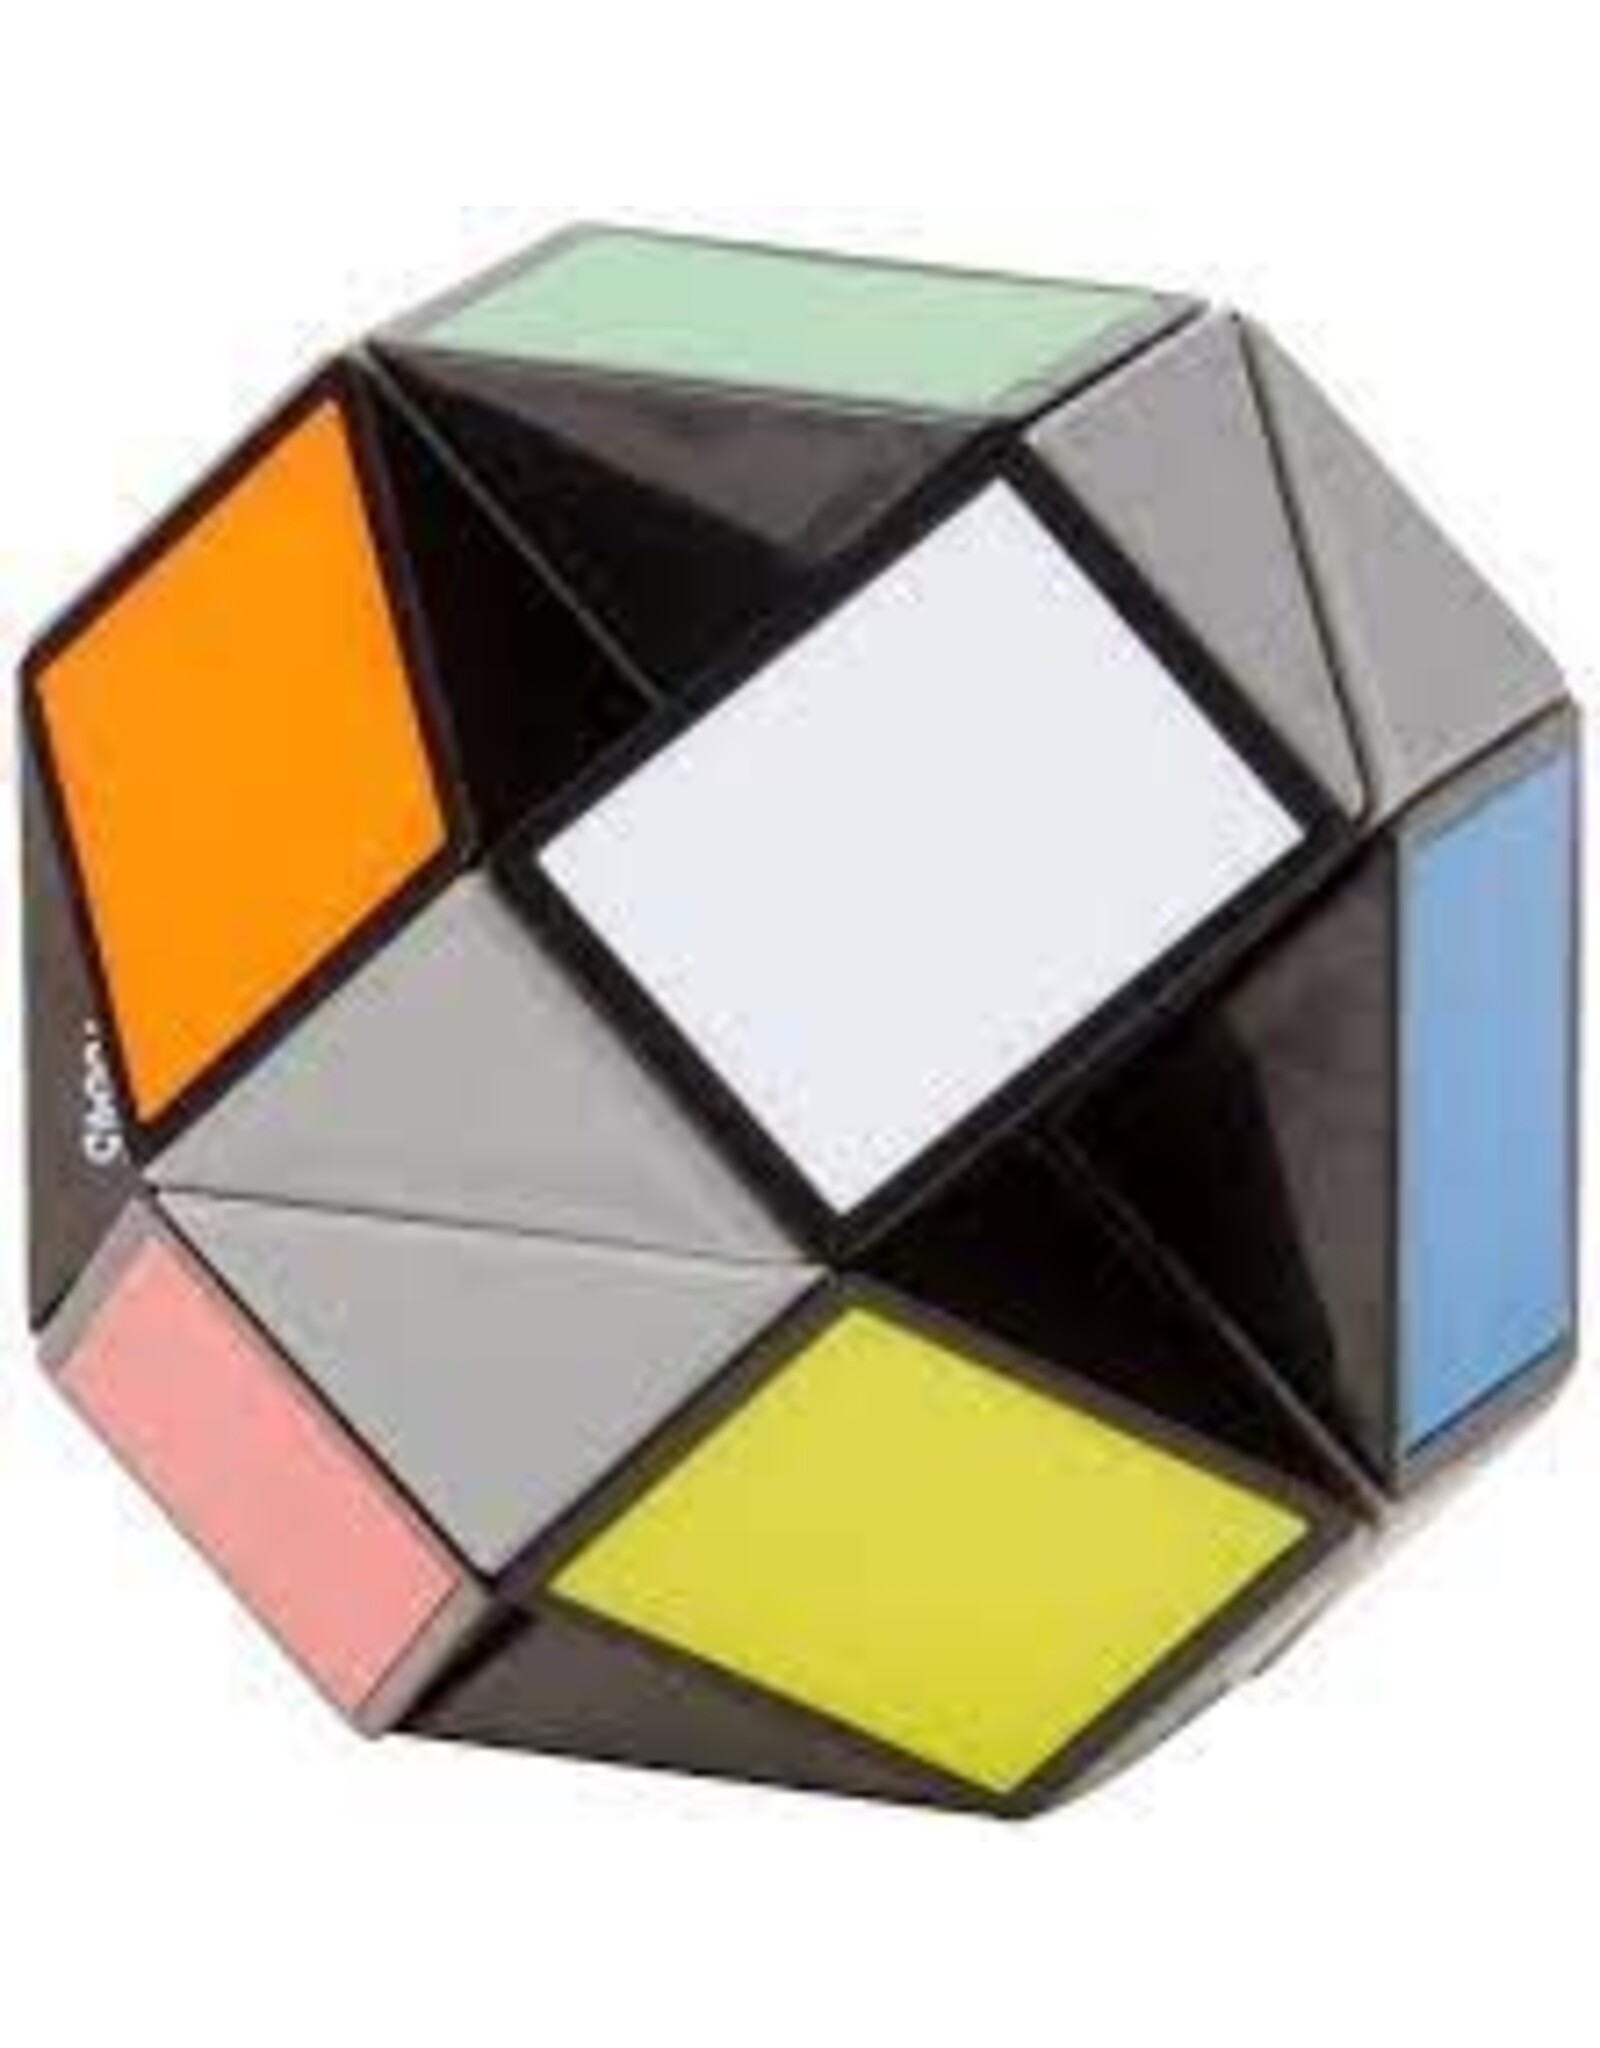 Rubiks twist